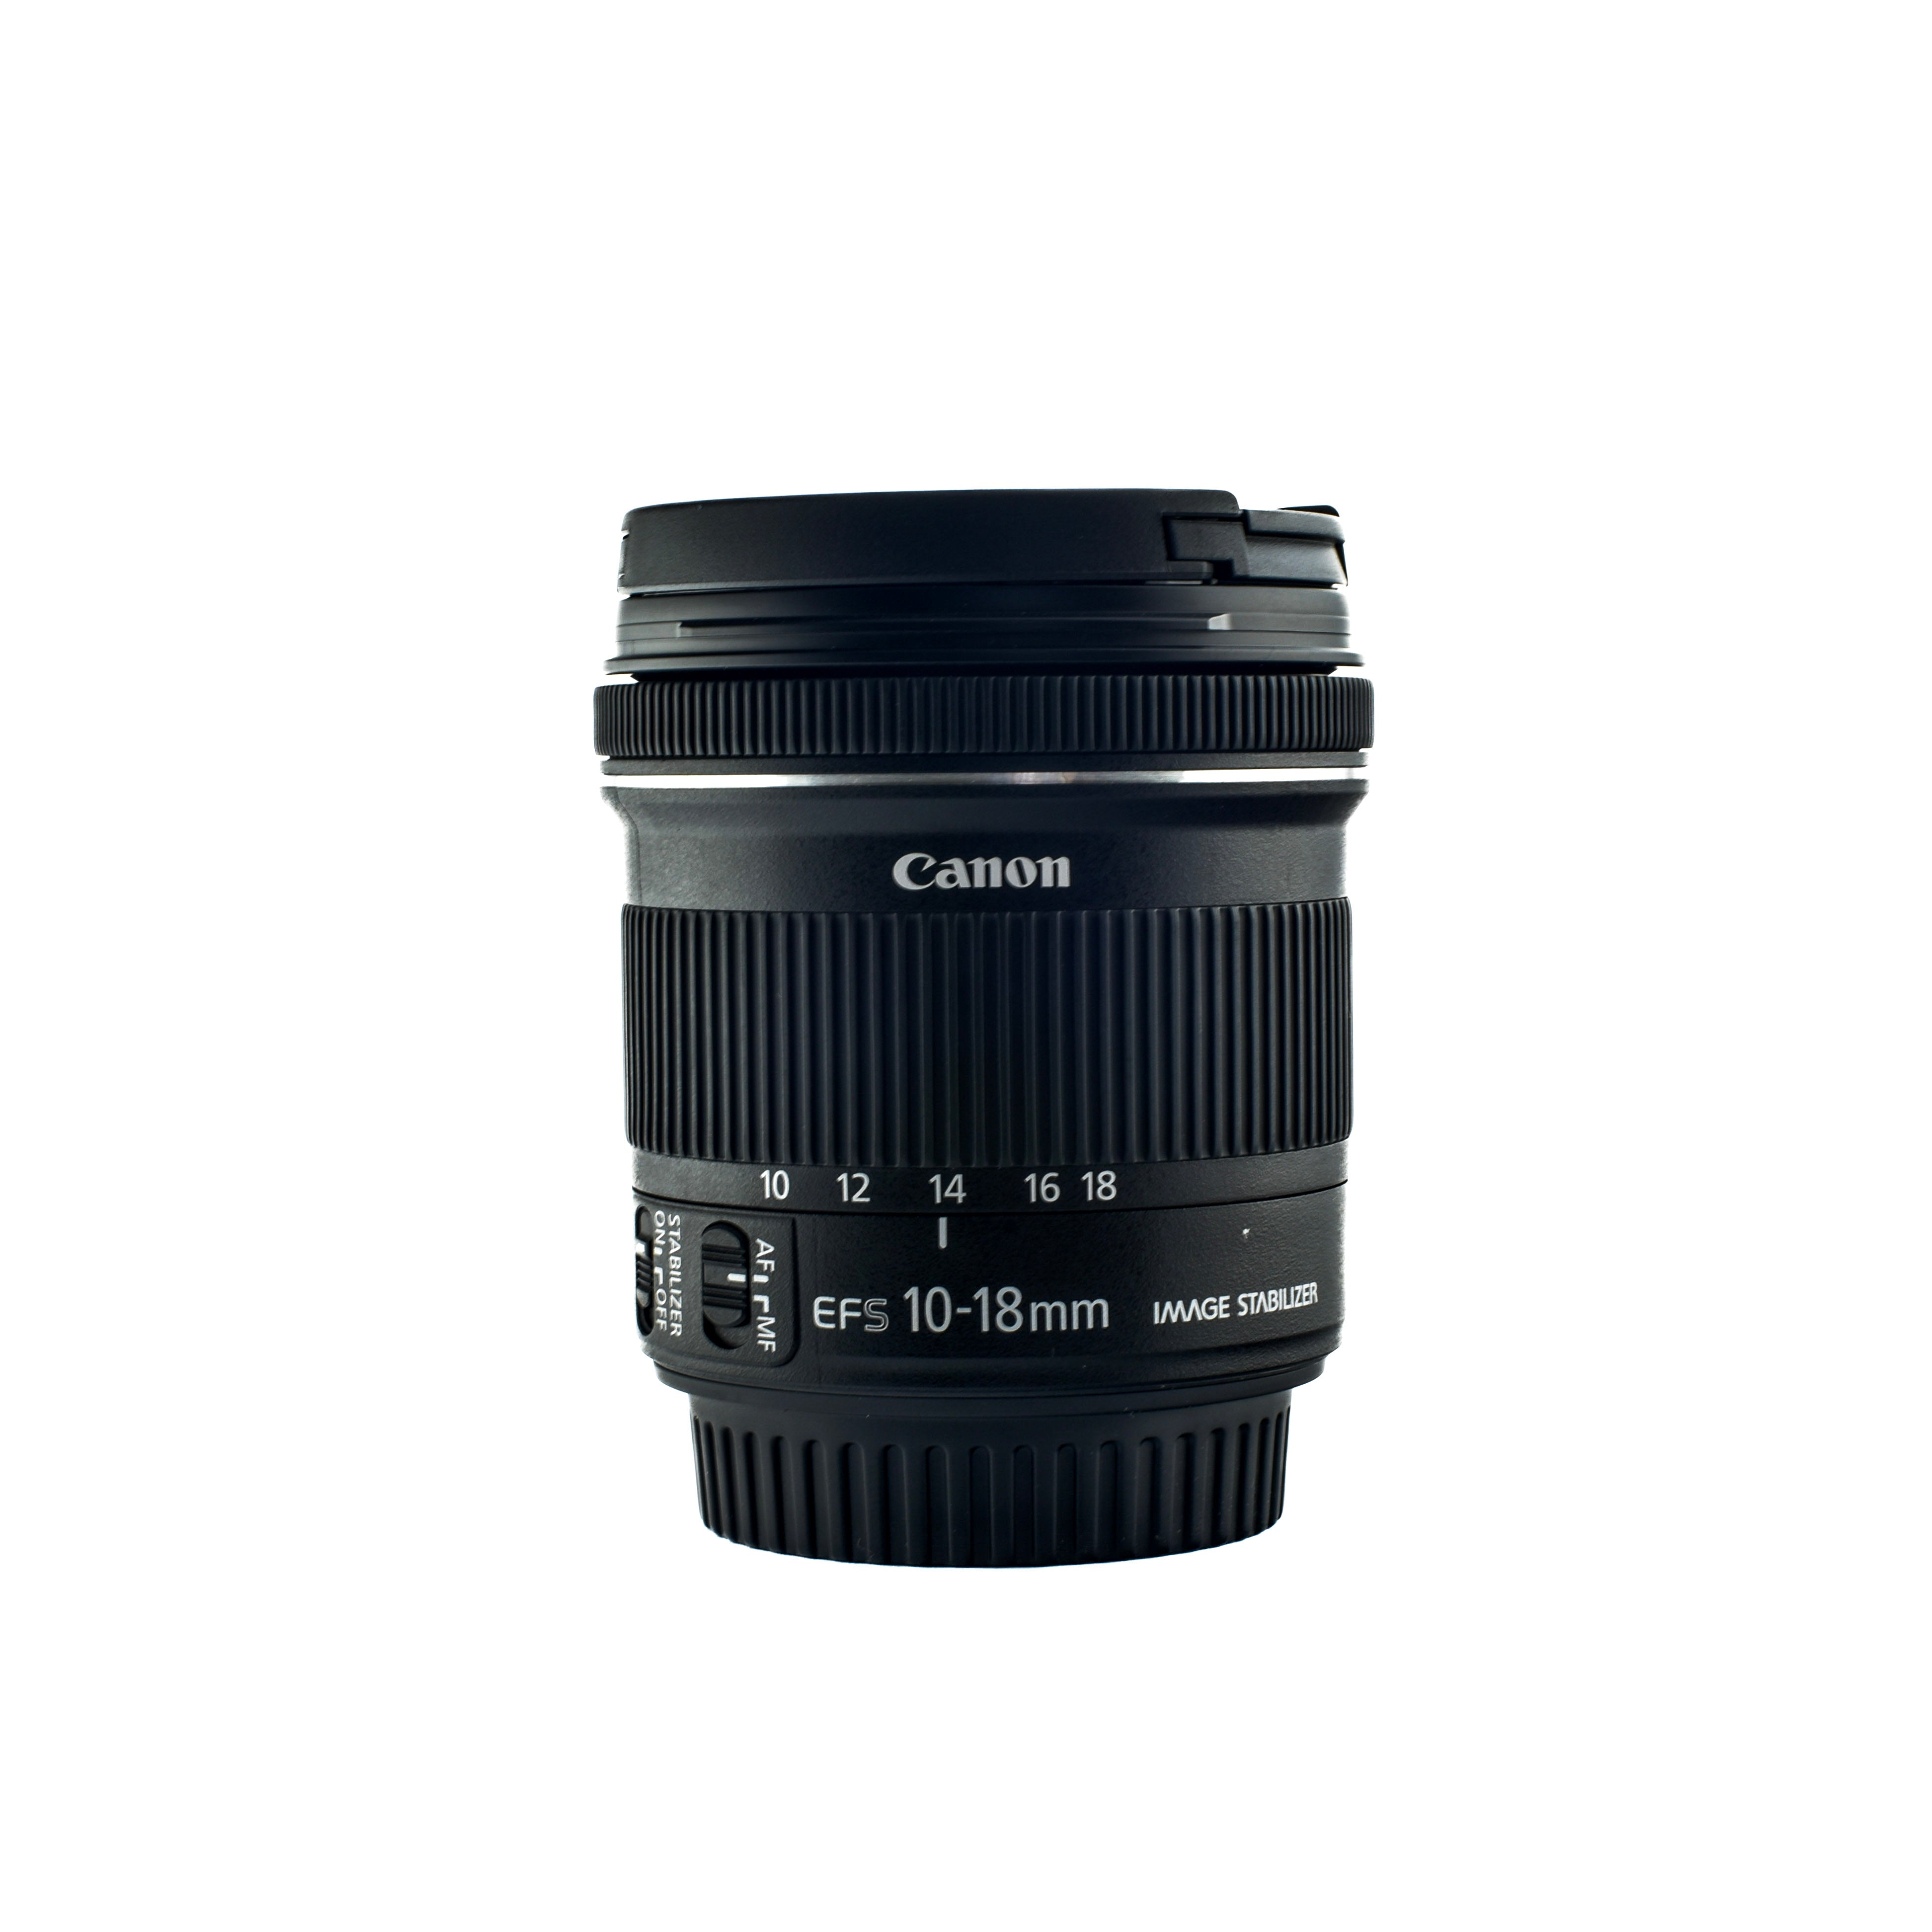 Canon EF-S 10-18mm f/4.5-6.3 IS STM lens